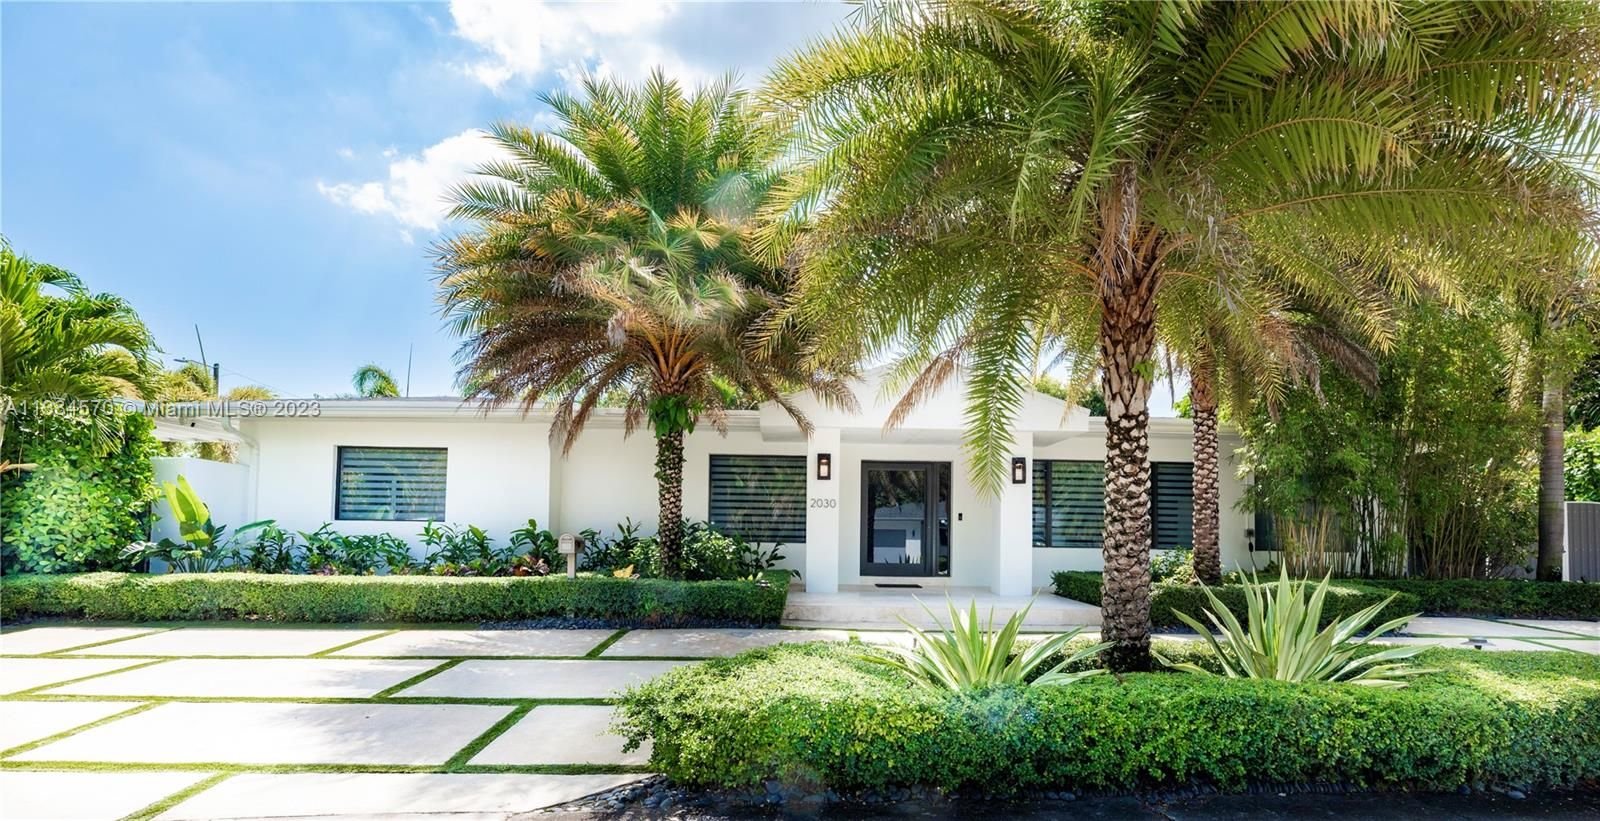 Real estate property located at 2030 186th Dr, Miami-Dade County, North Miami Beach, FL